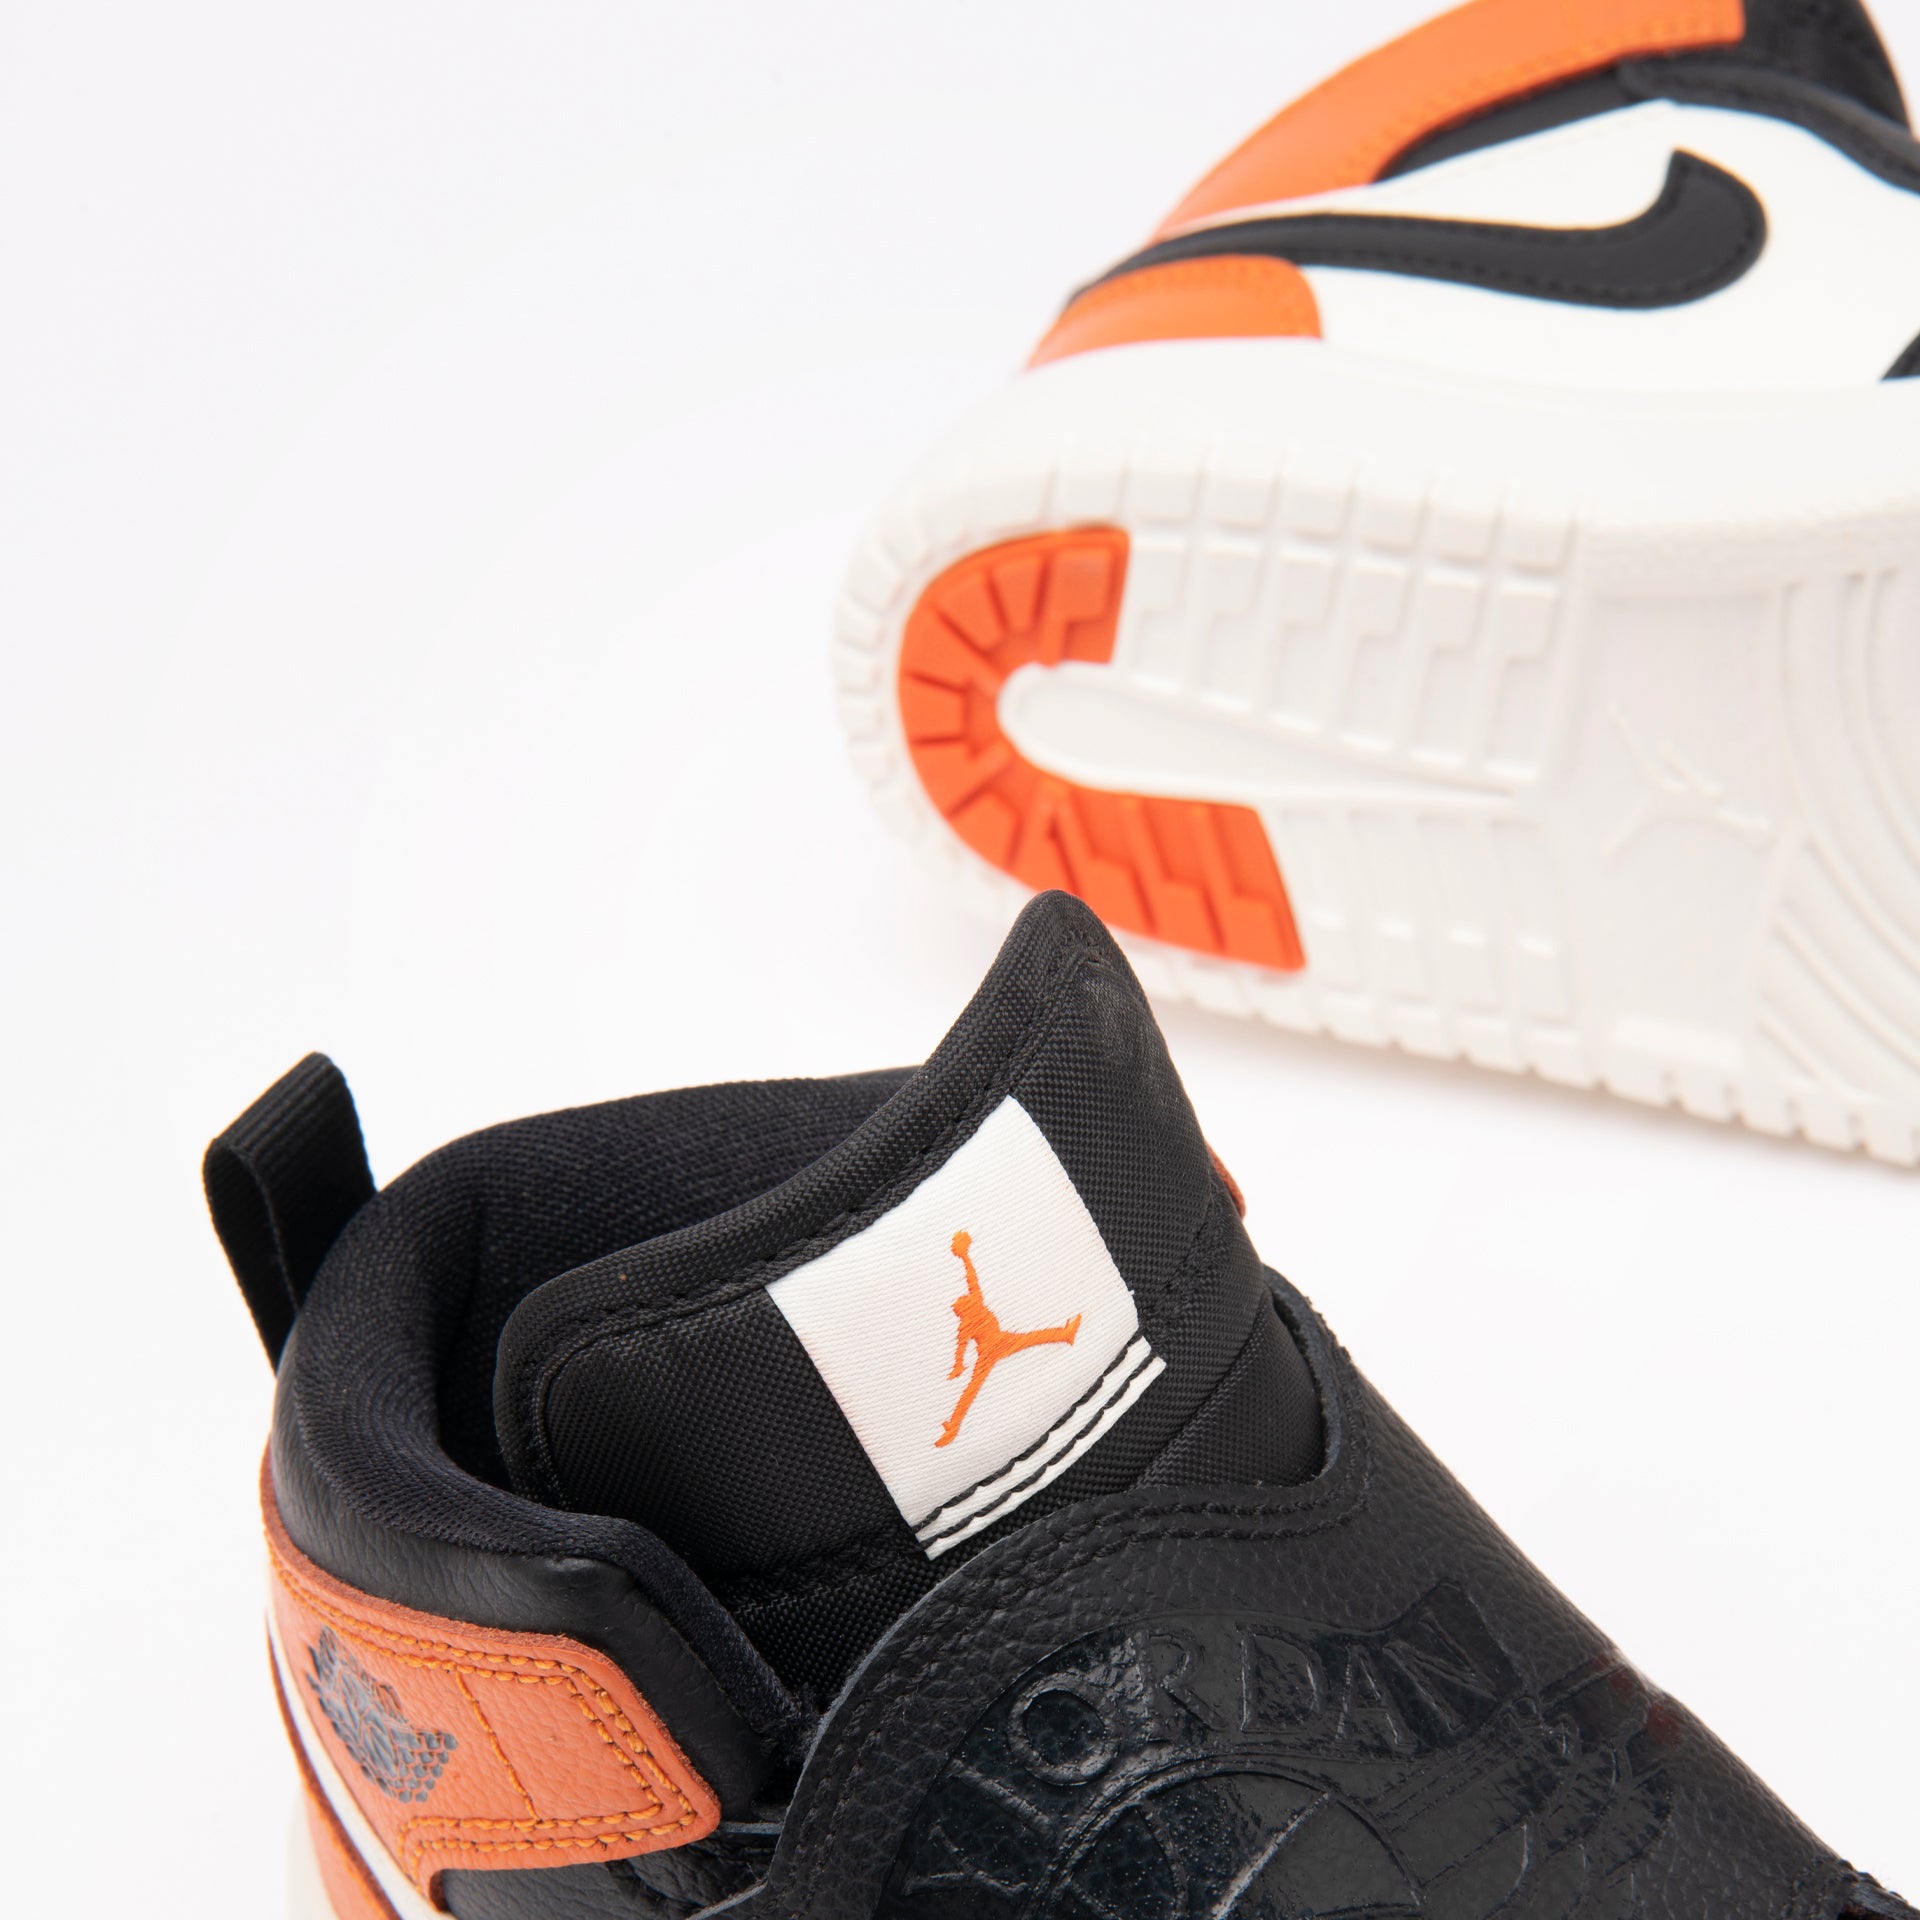 Sky Jordan 1 (PS) Sneakers From Nike